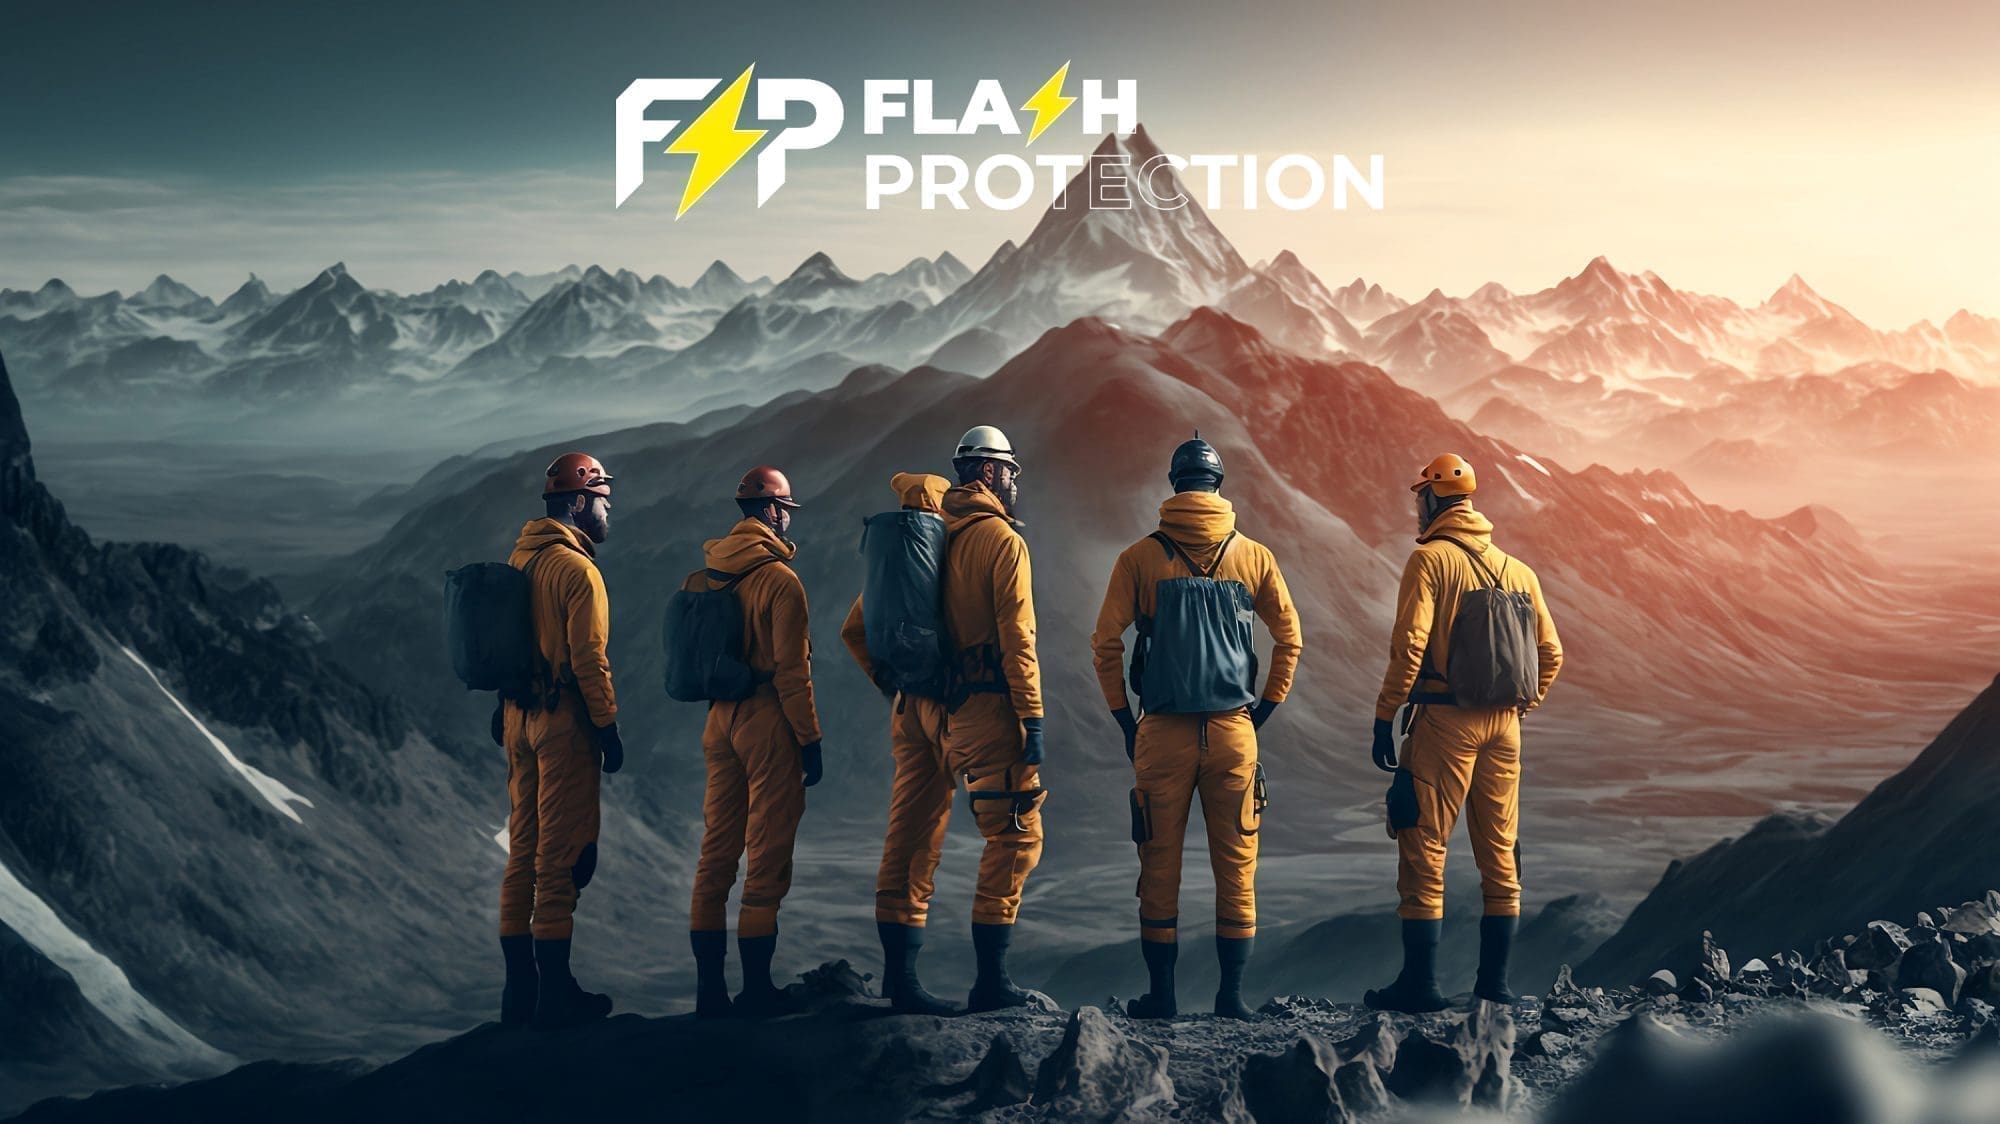 fond ecran flash protection 2023